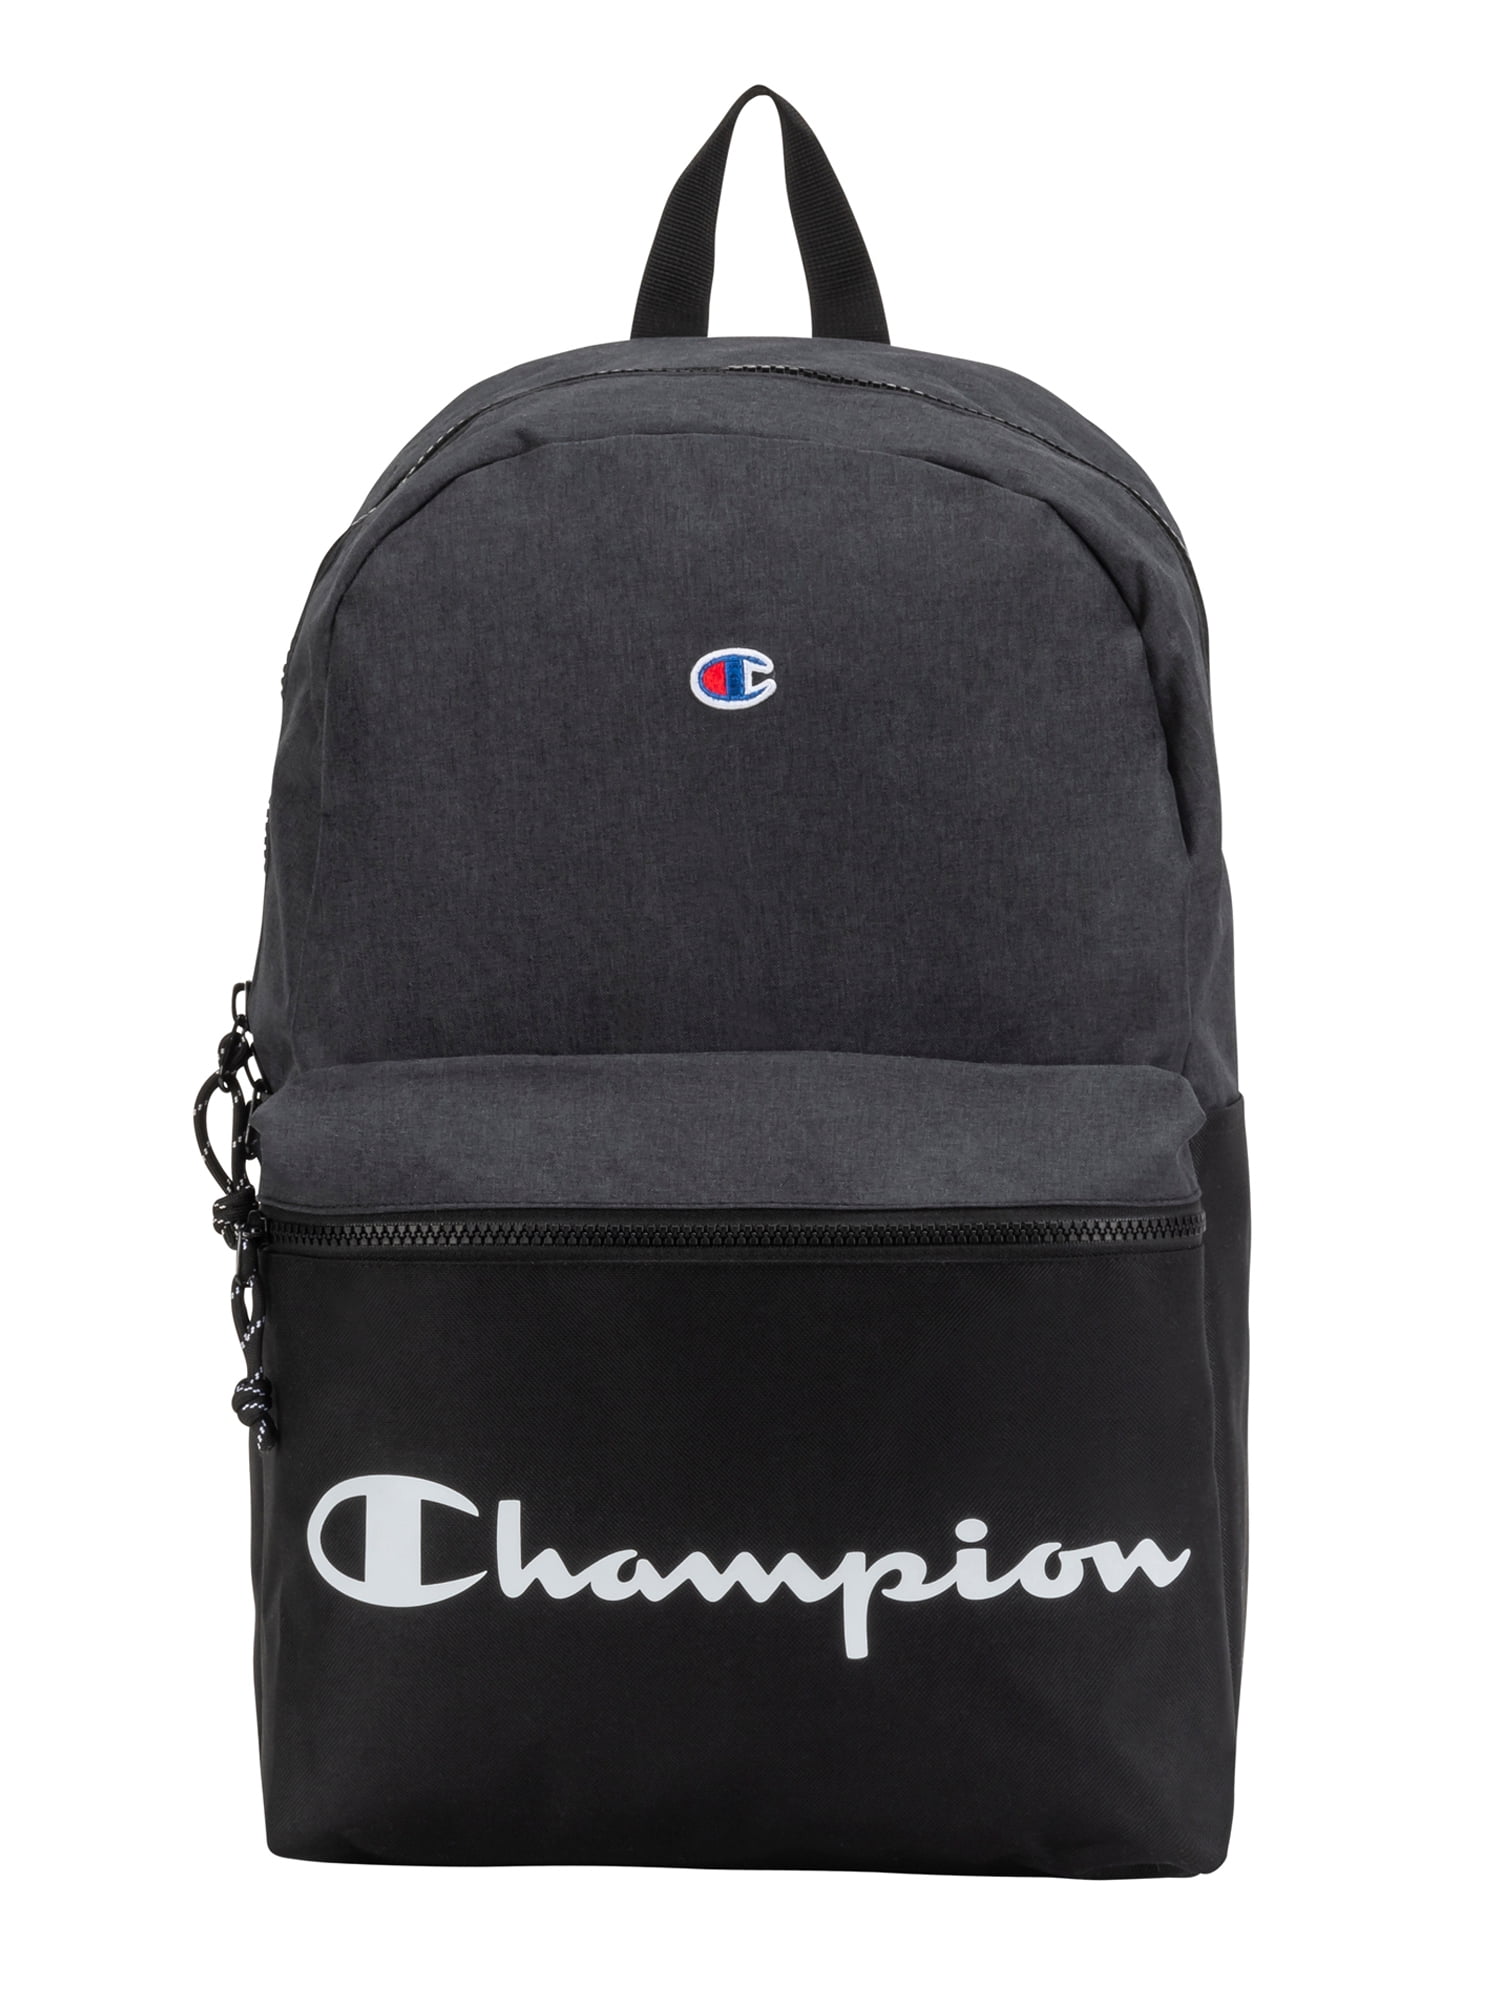 champion backpack walmart